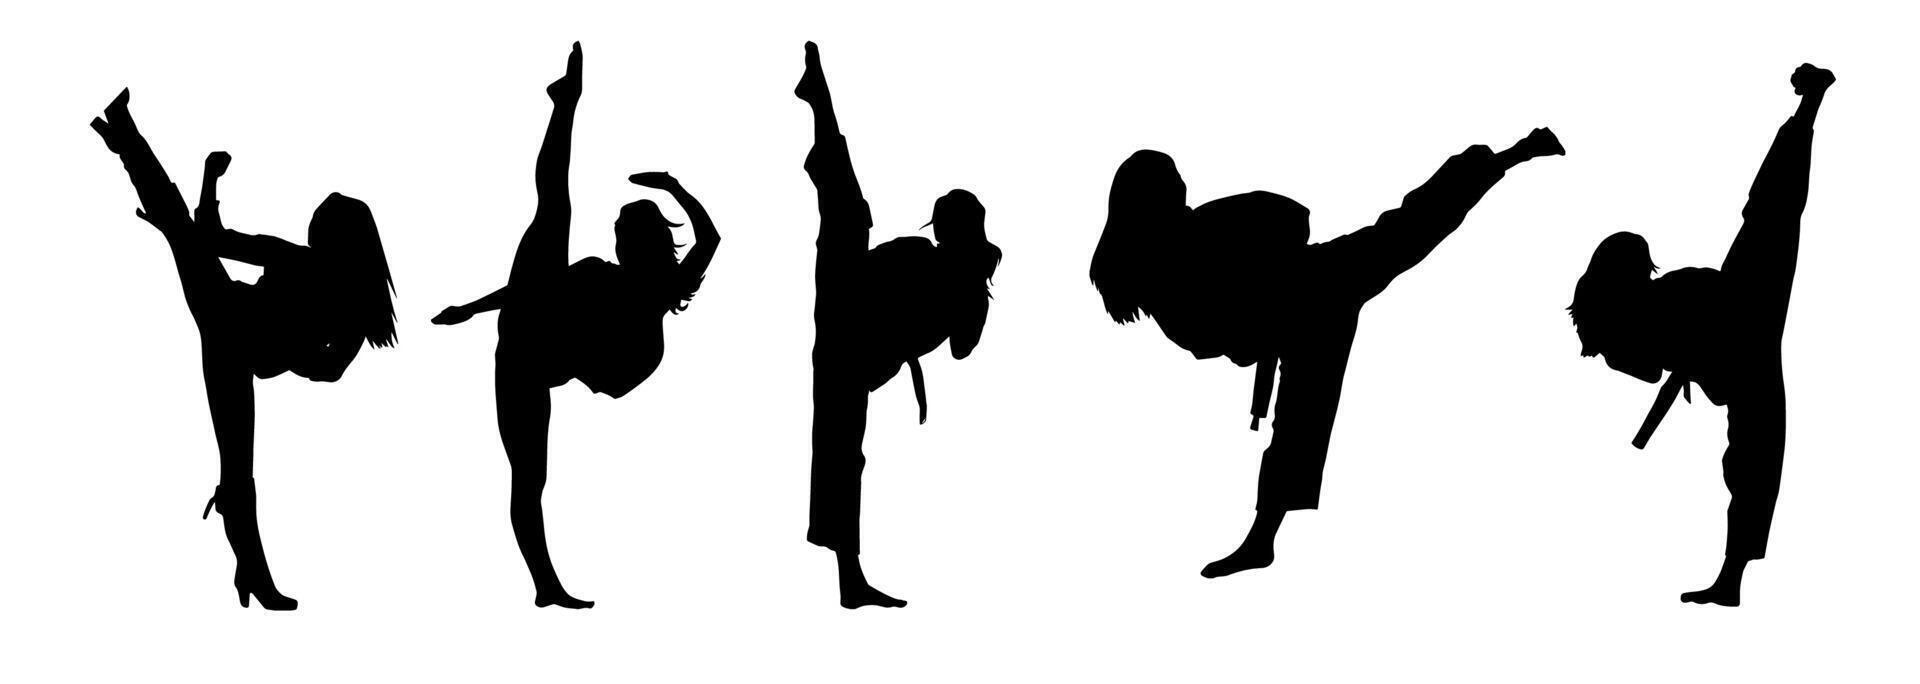 silueta colección de marcial Arte mujer pateando pose. silueta de hembra guerreros en acción pose. vector